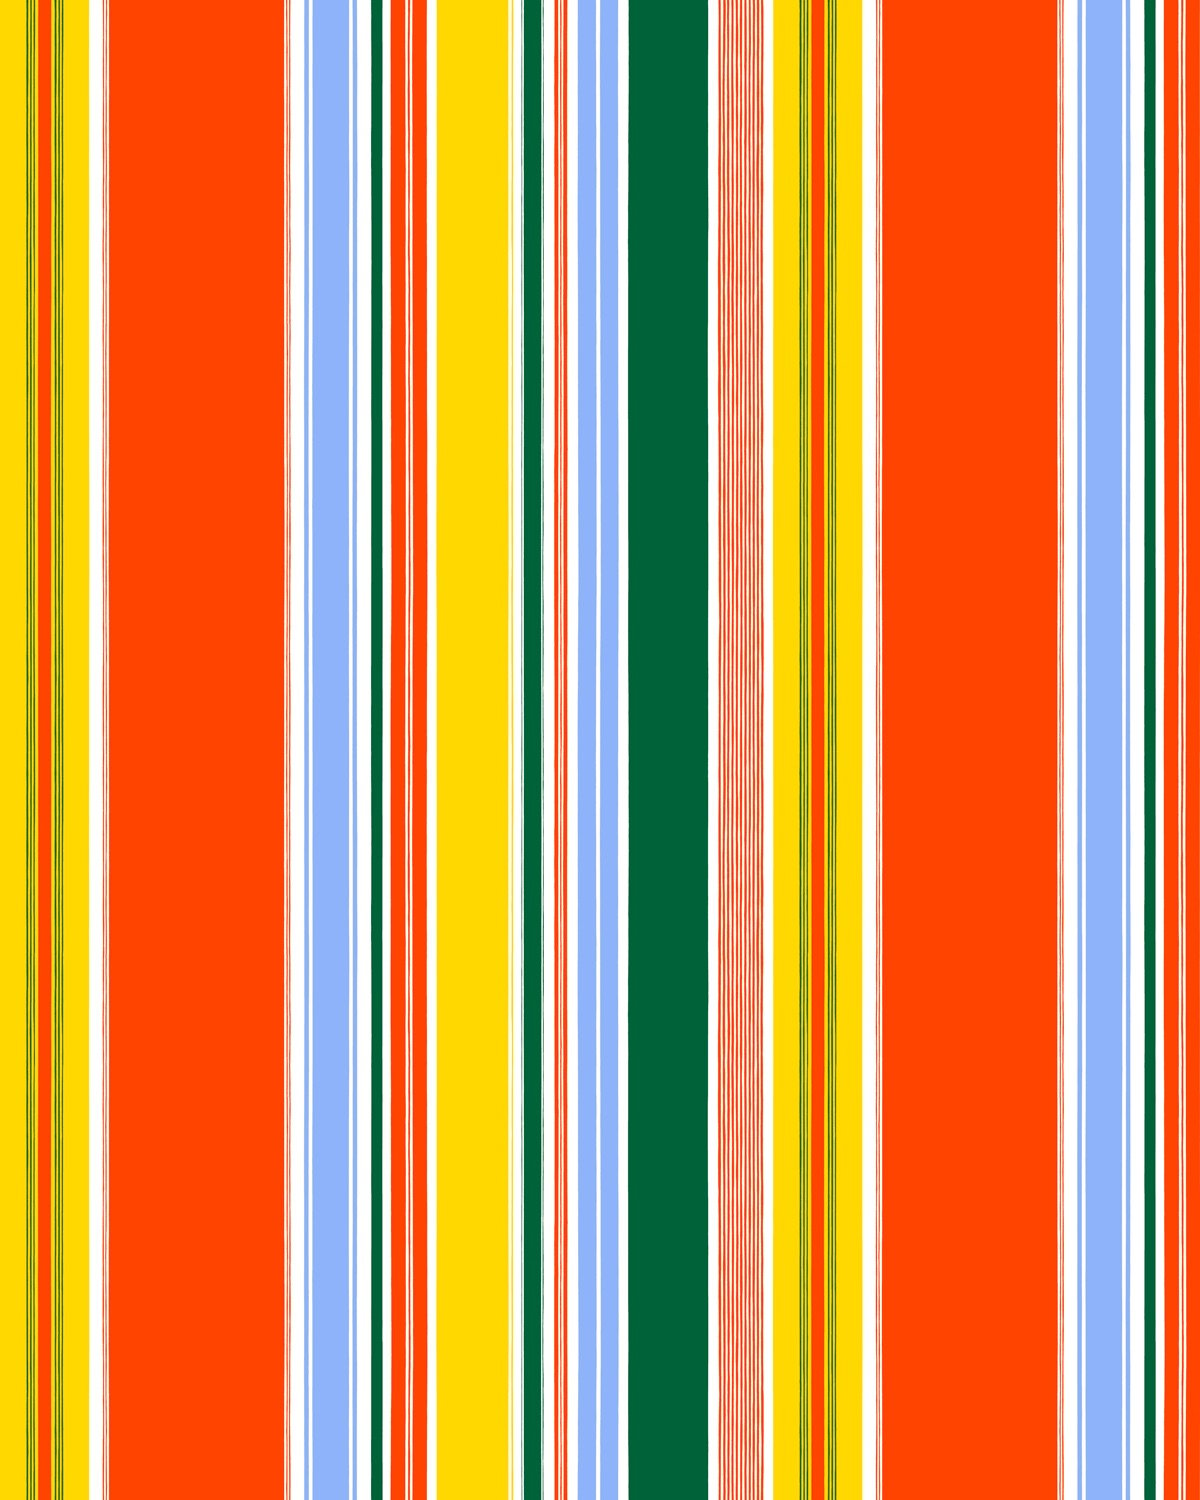 Marimekko print patterns vertical stripes